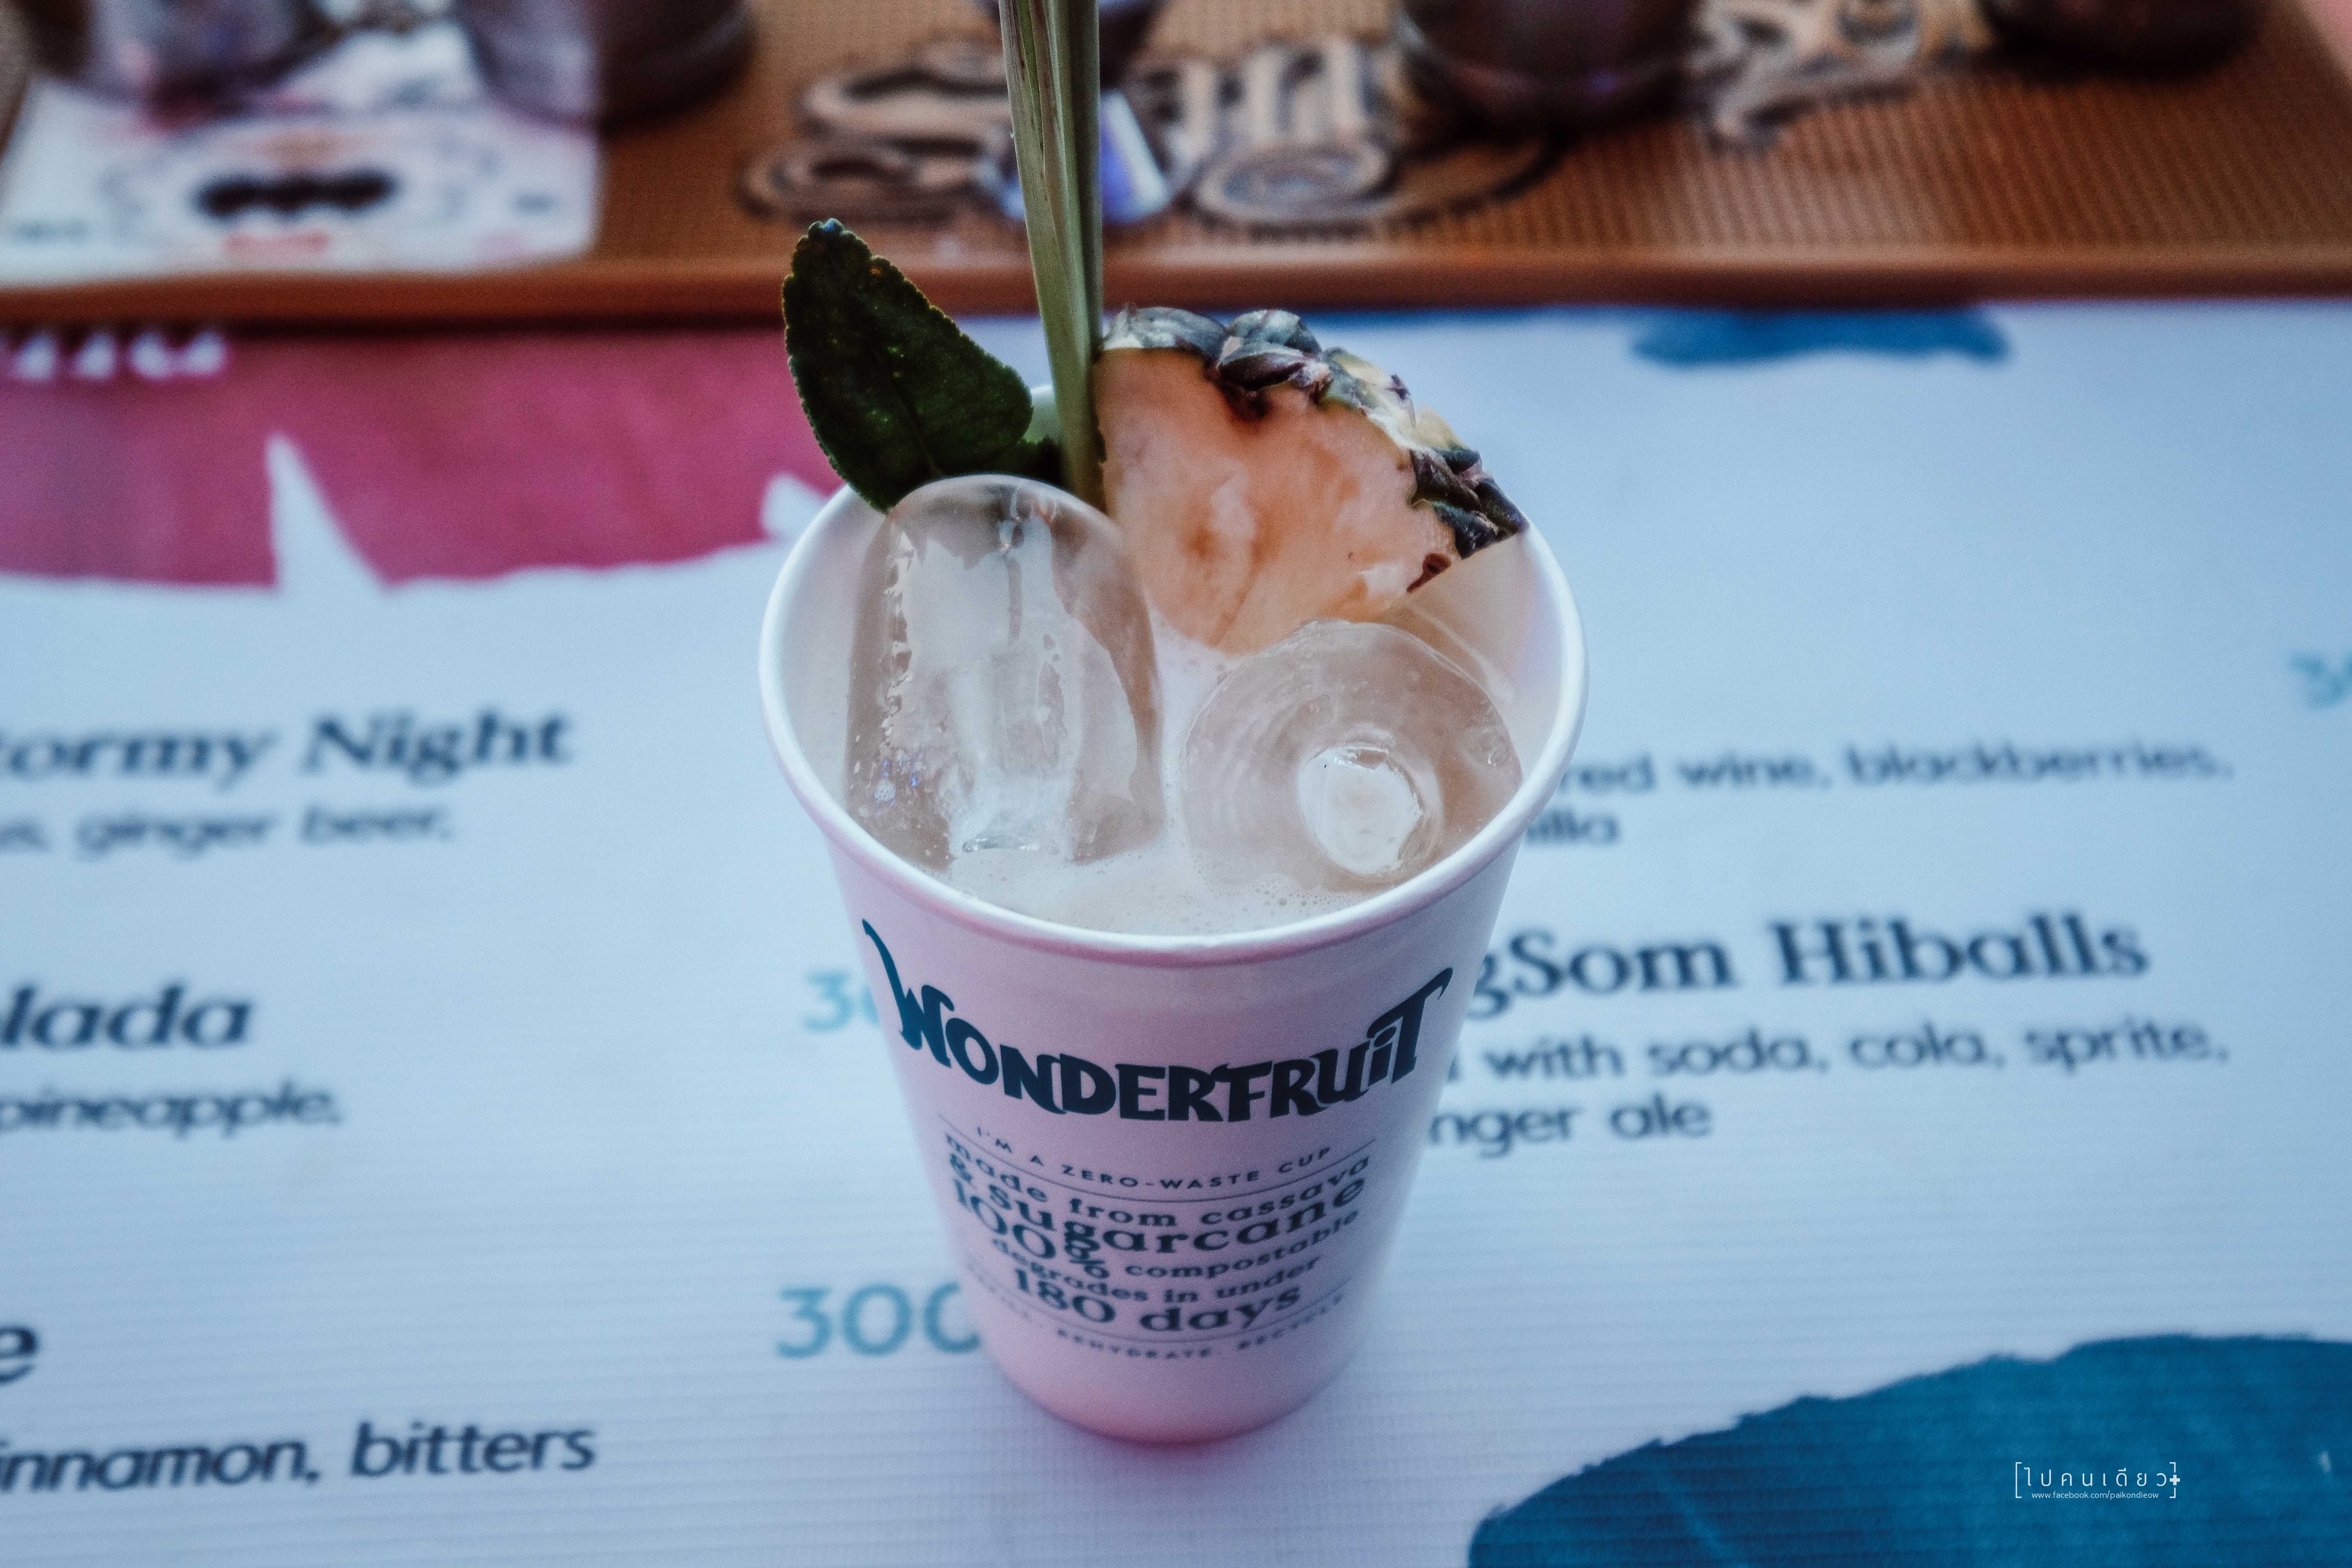 SangSom MoonlightLounge Wonderfruit2018 Wonderfruit wonderfruitfest festival Freedom Pattaya Thailand